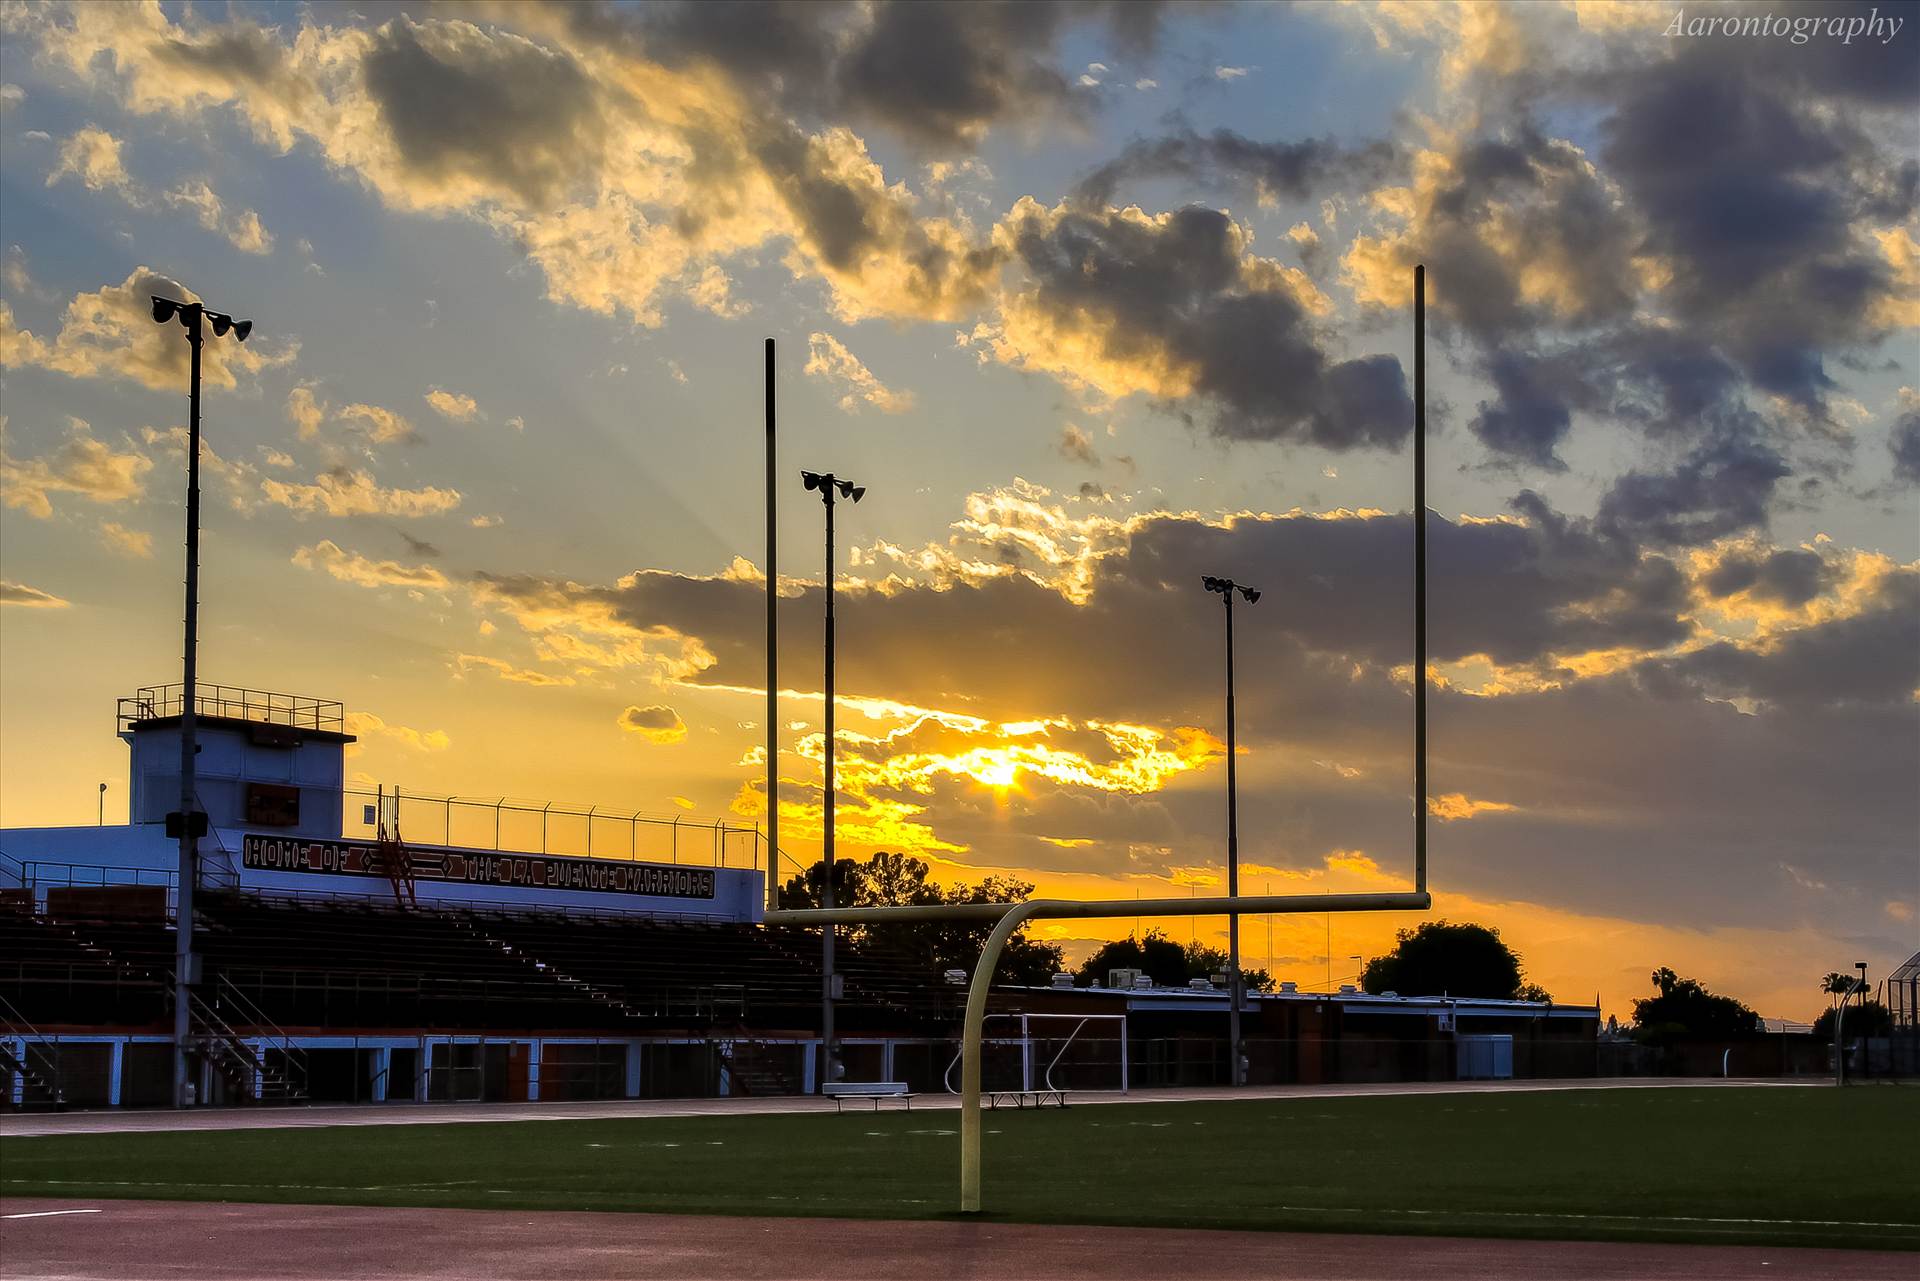 Sunset on the field.jpg  by Aaron